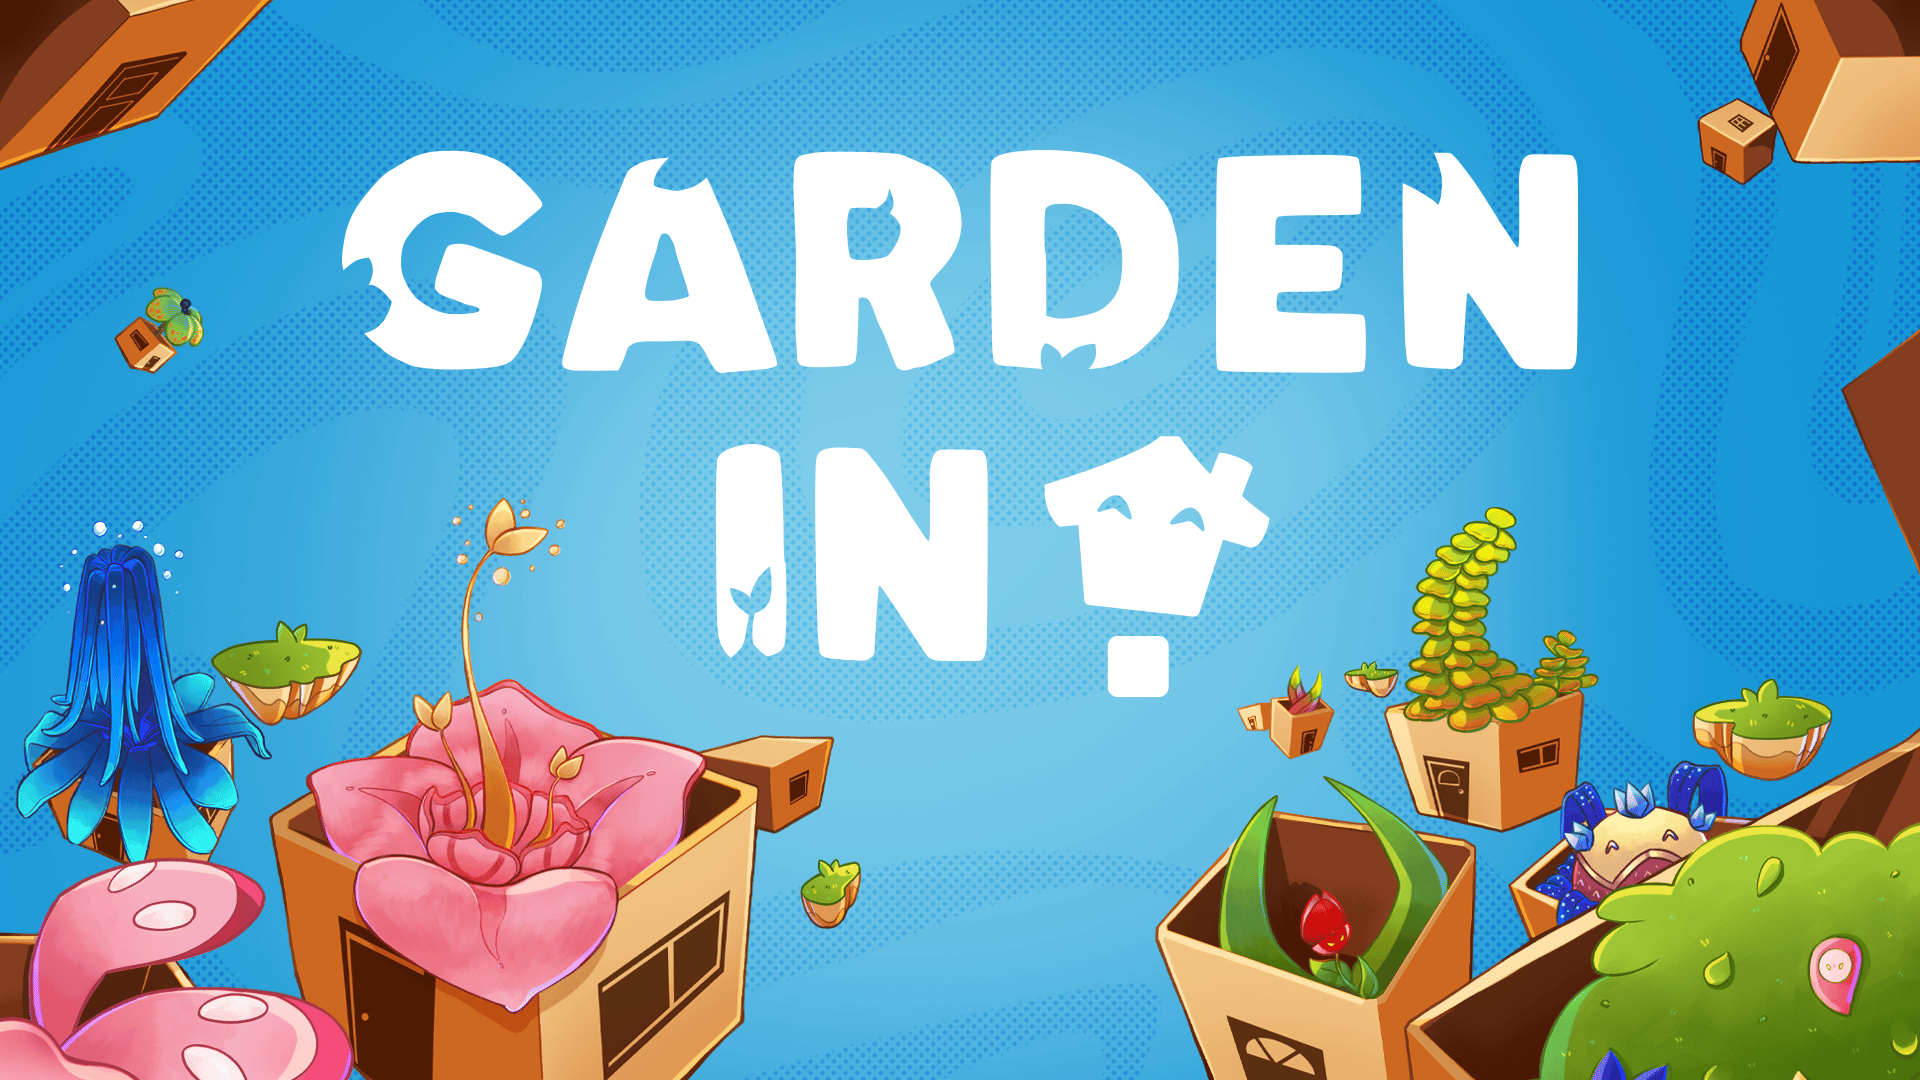 Garden In! copertina